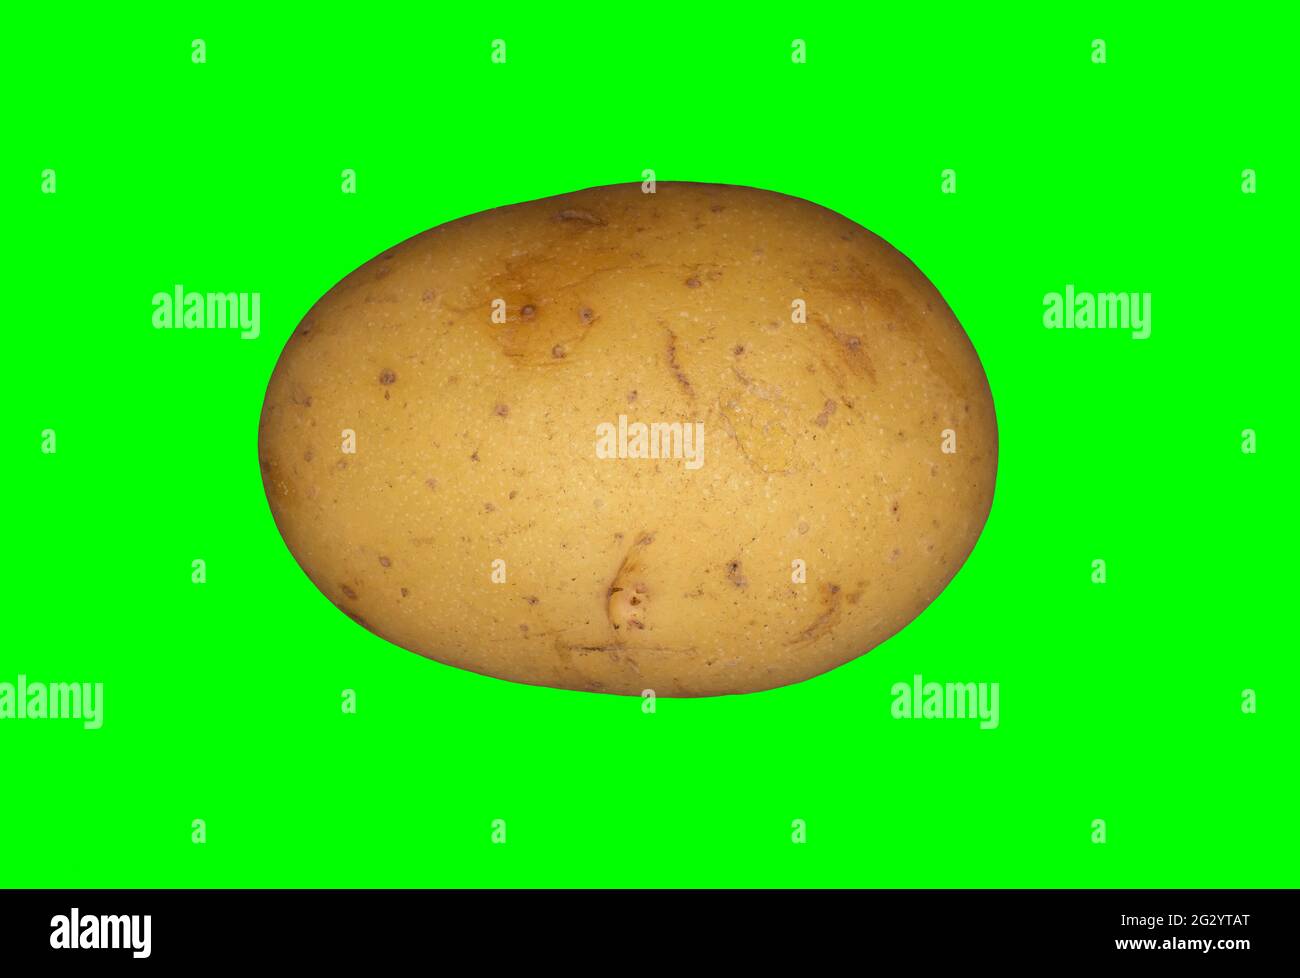 A white potato on a plain green background ready for easy keying Stock Photo